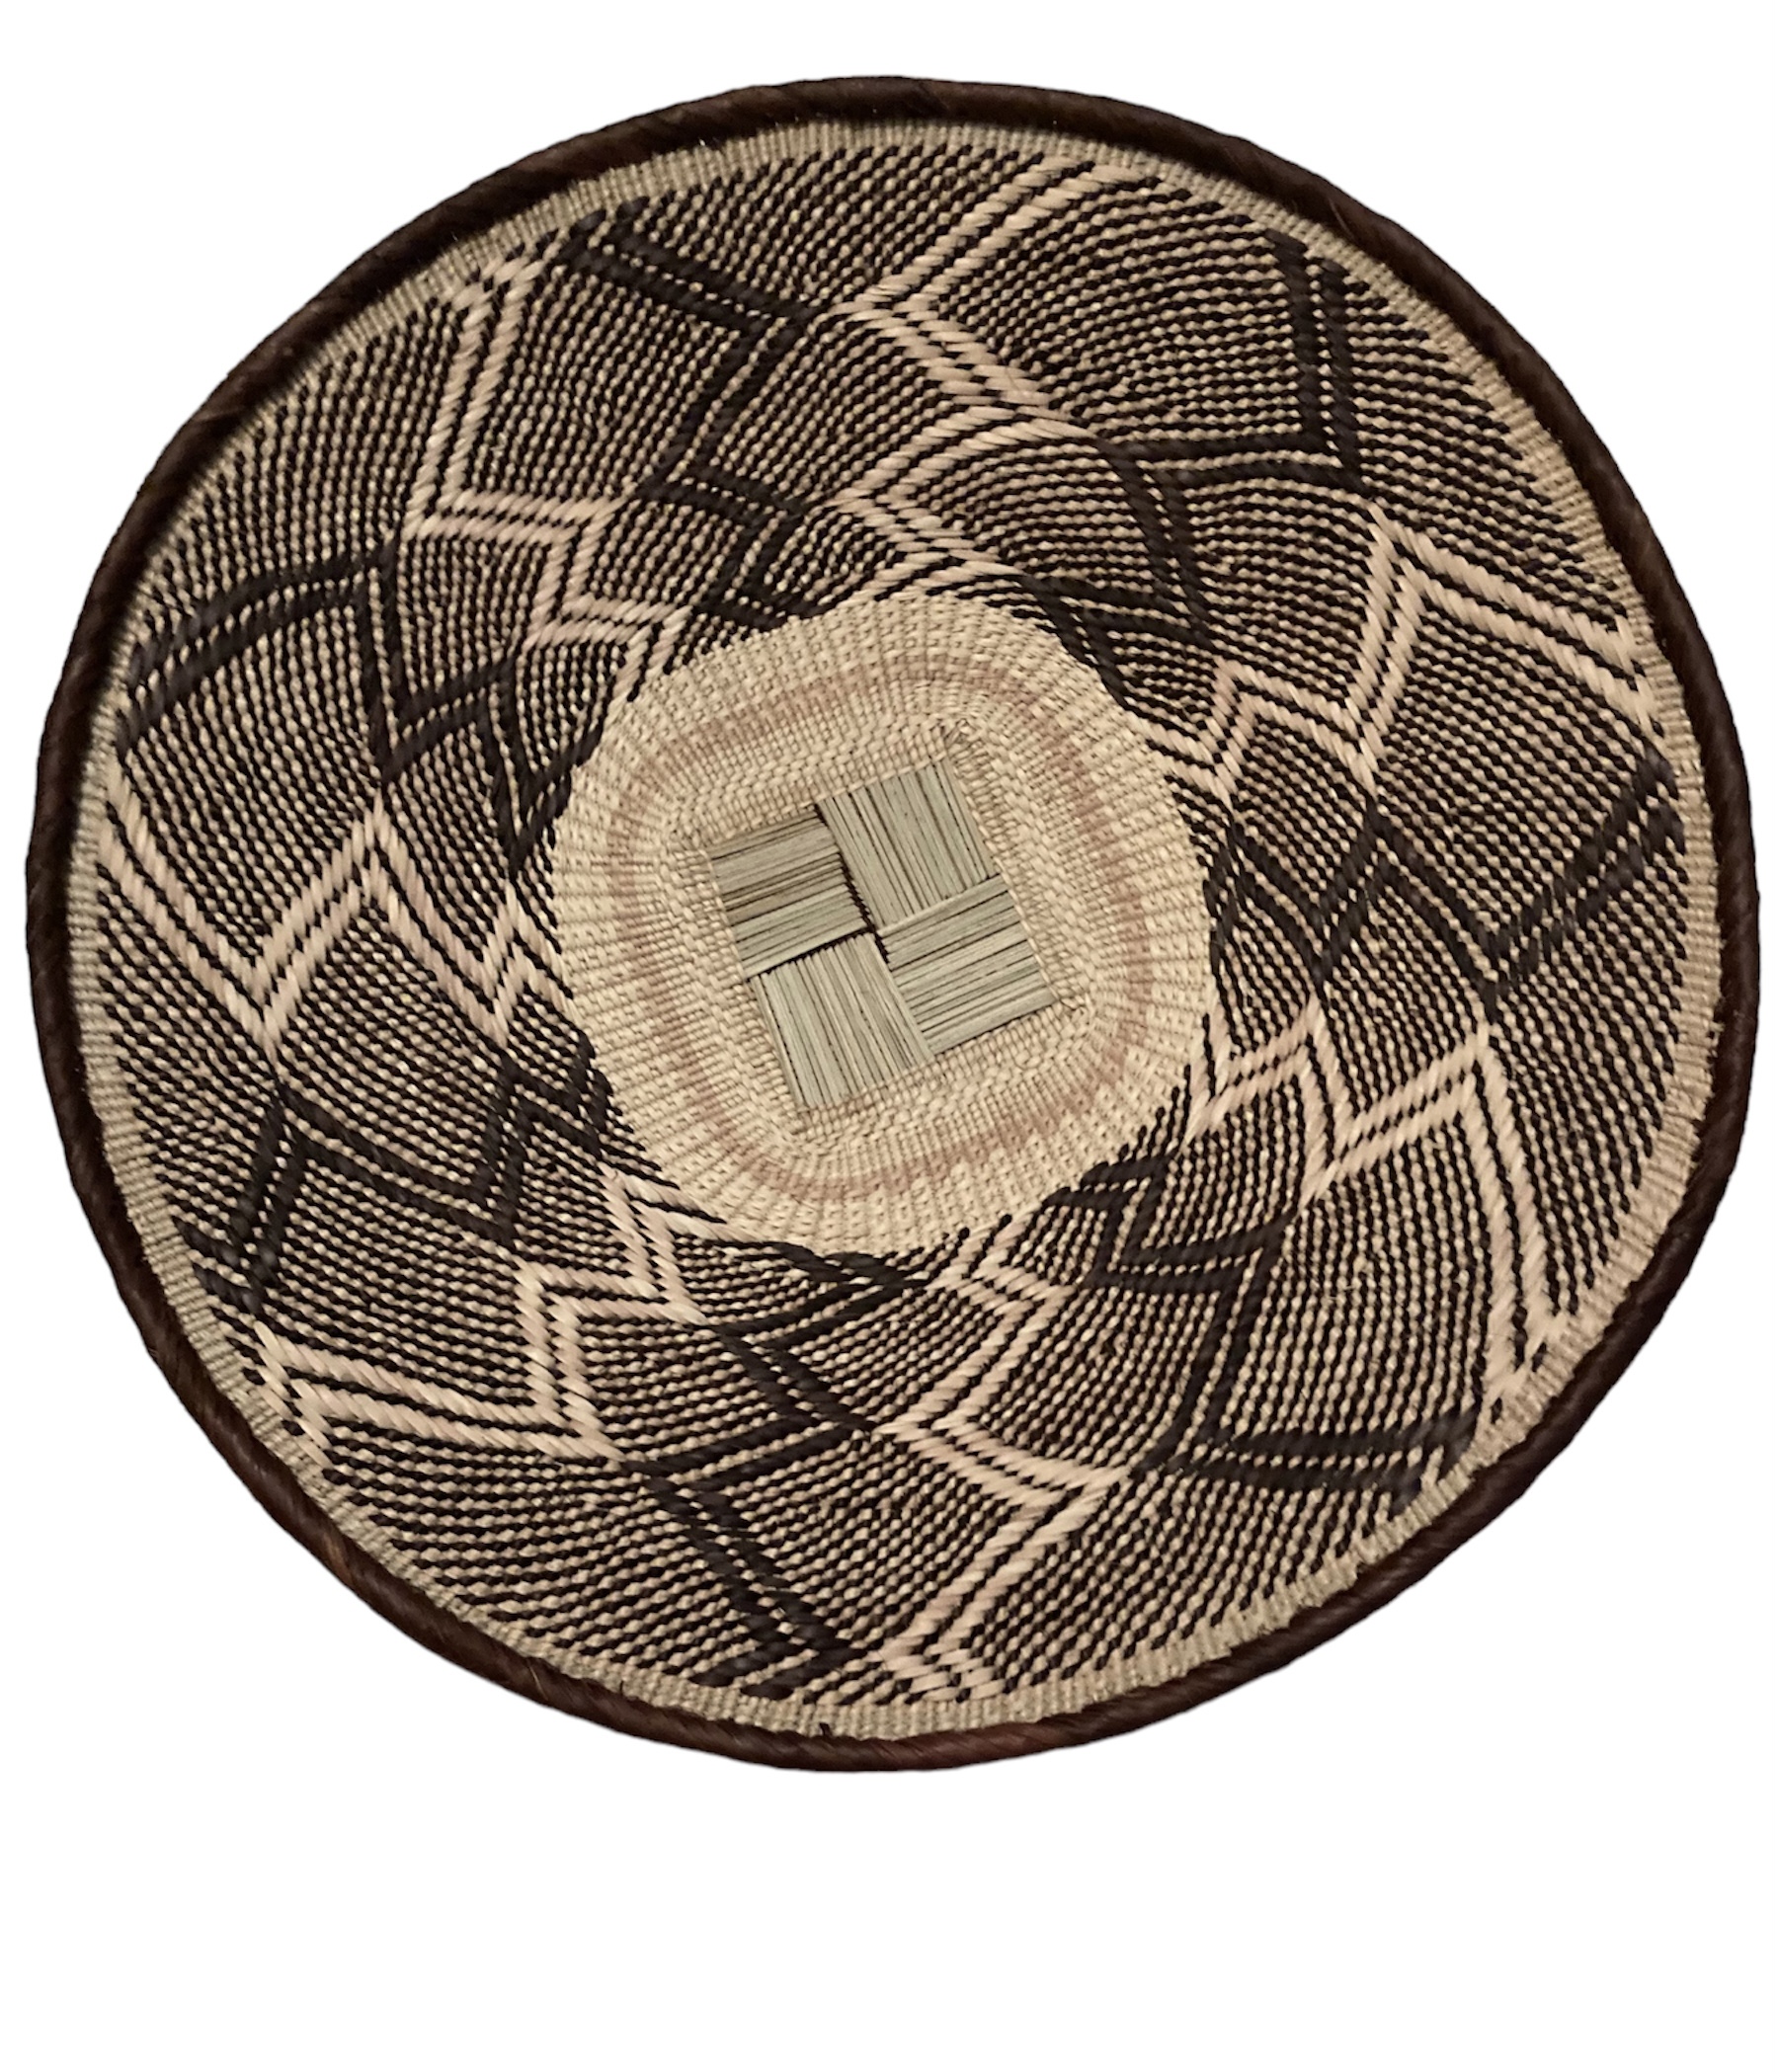 Tonga Basket from Zimbabwe - Design #018 - 18 1/2" dia.